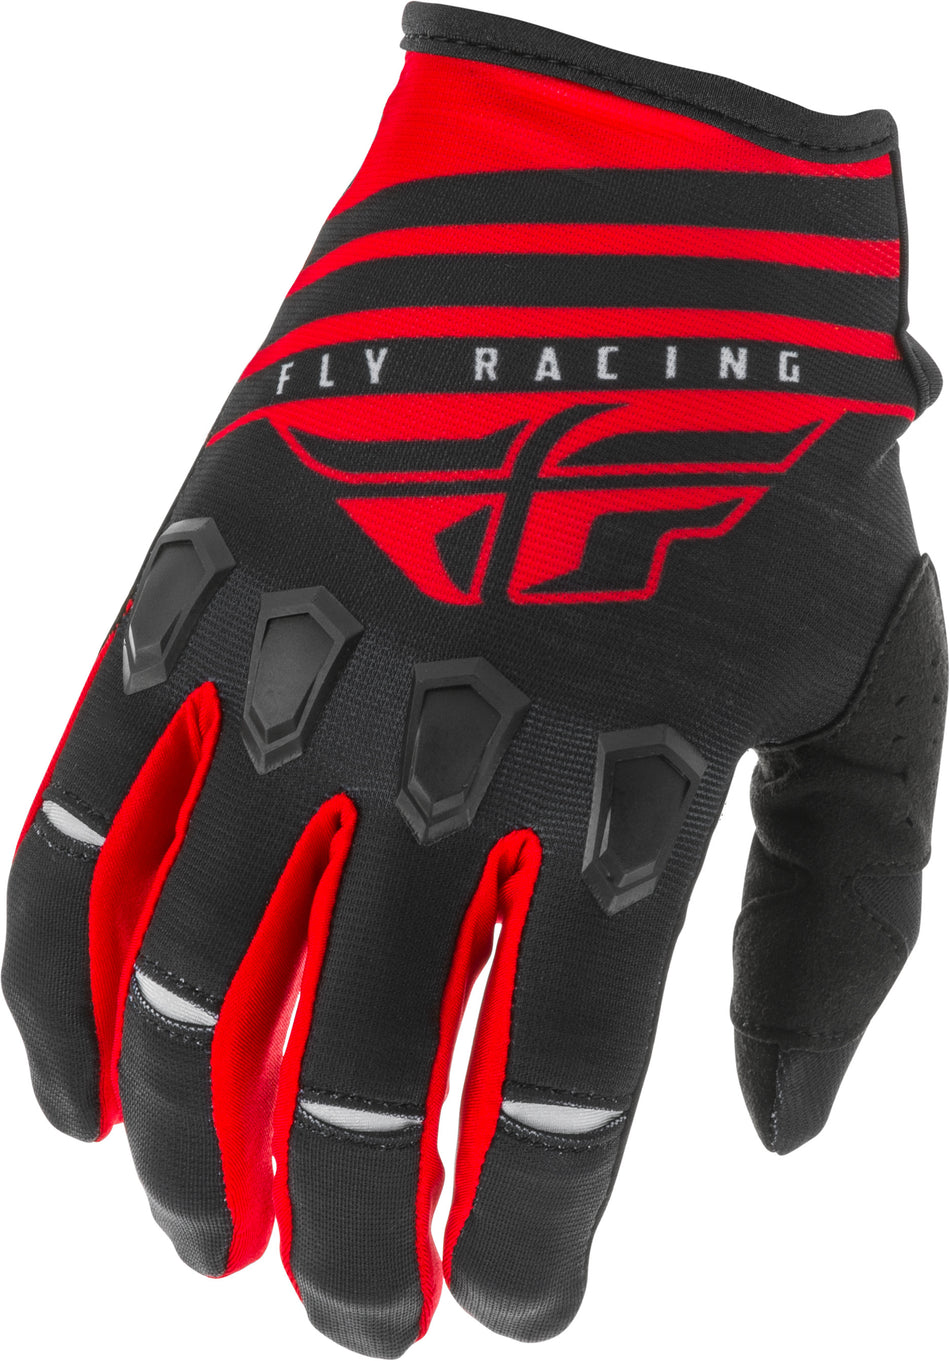 FLY RACING Kinetic K220 Gloves Red/Black/White Sz 10 373-51310